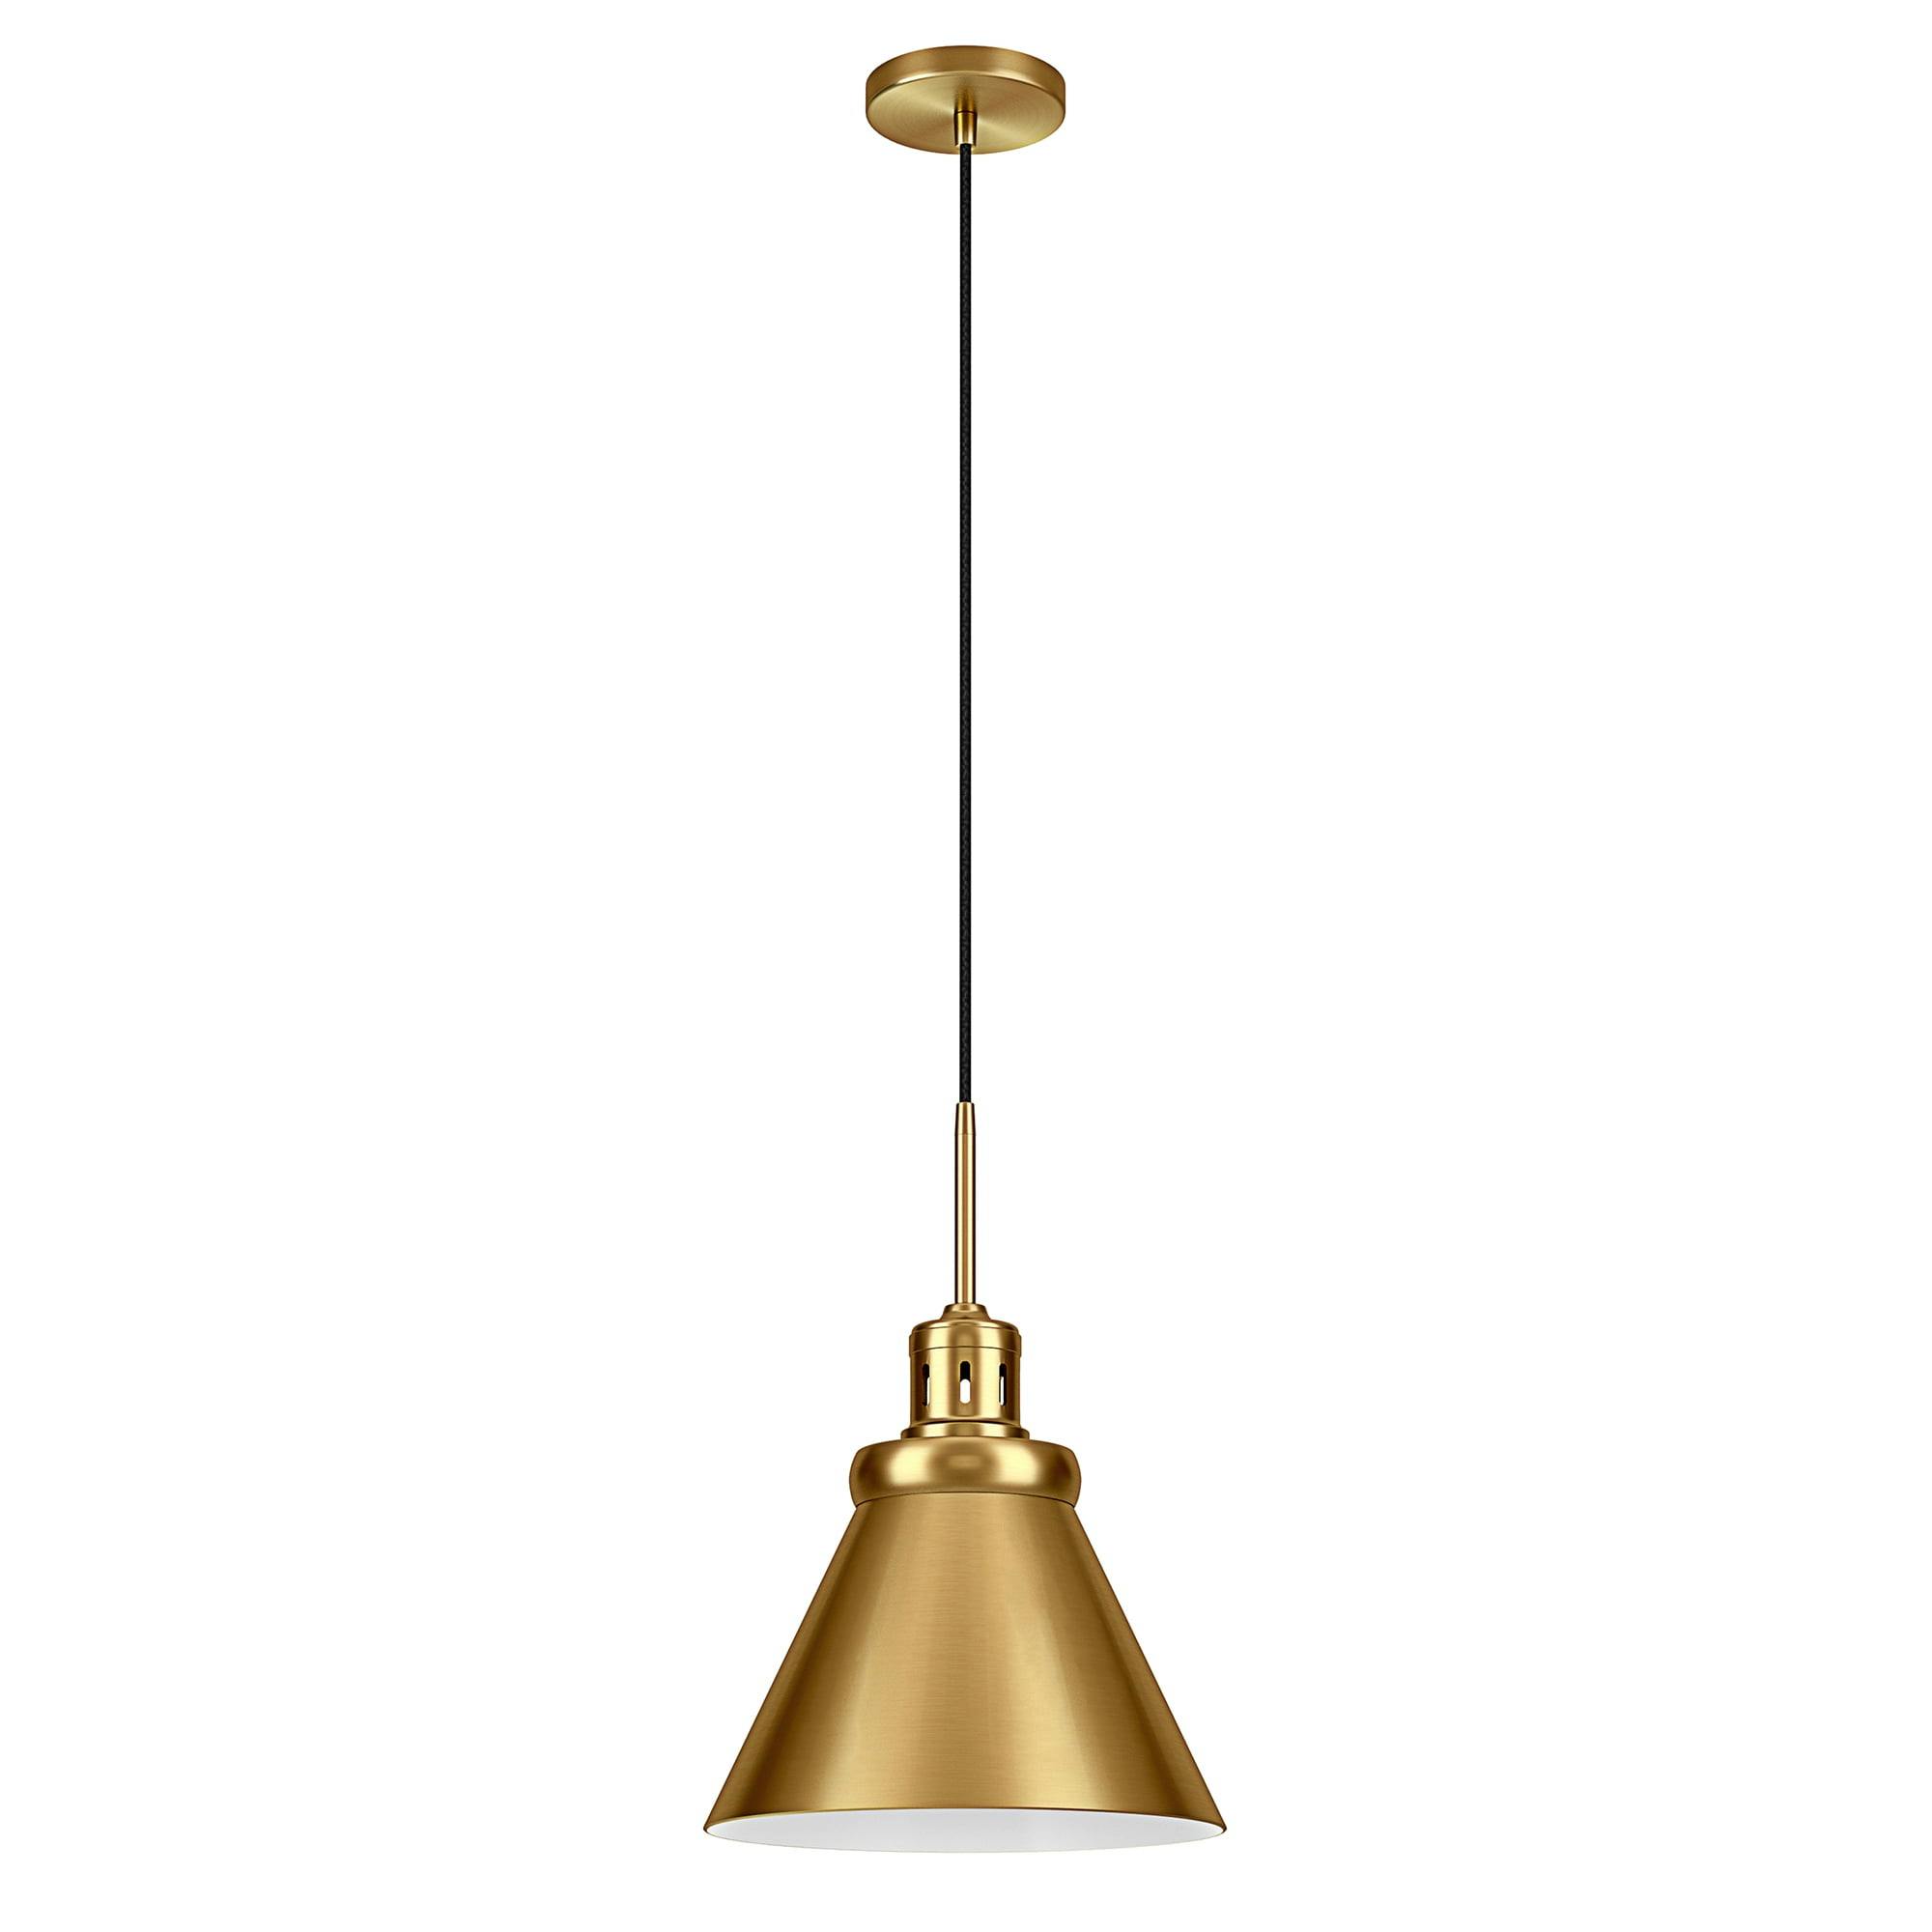 Retro-Inspired 12" Brushed Brass Cone-Shaped Pendant Light